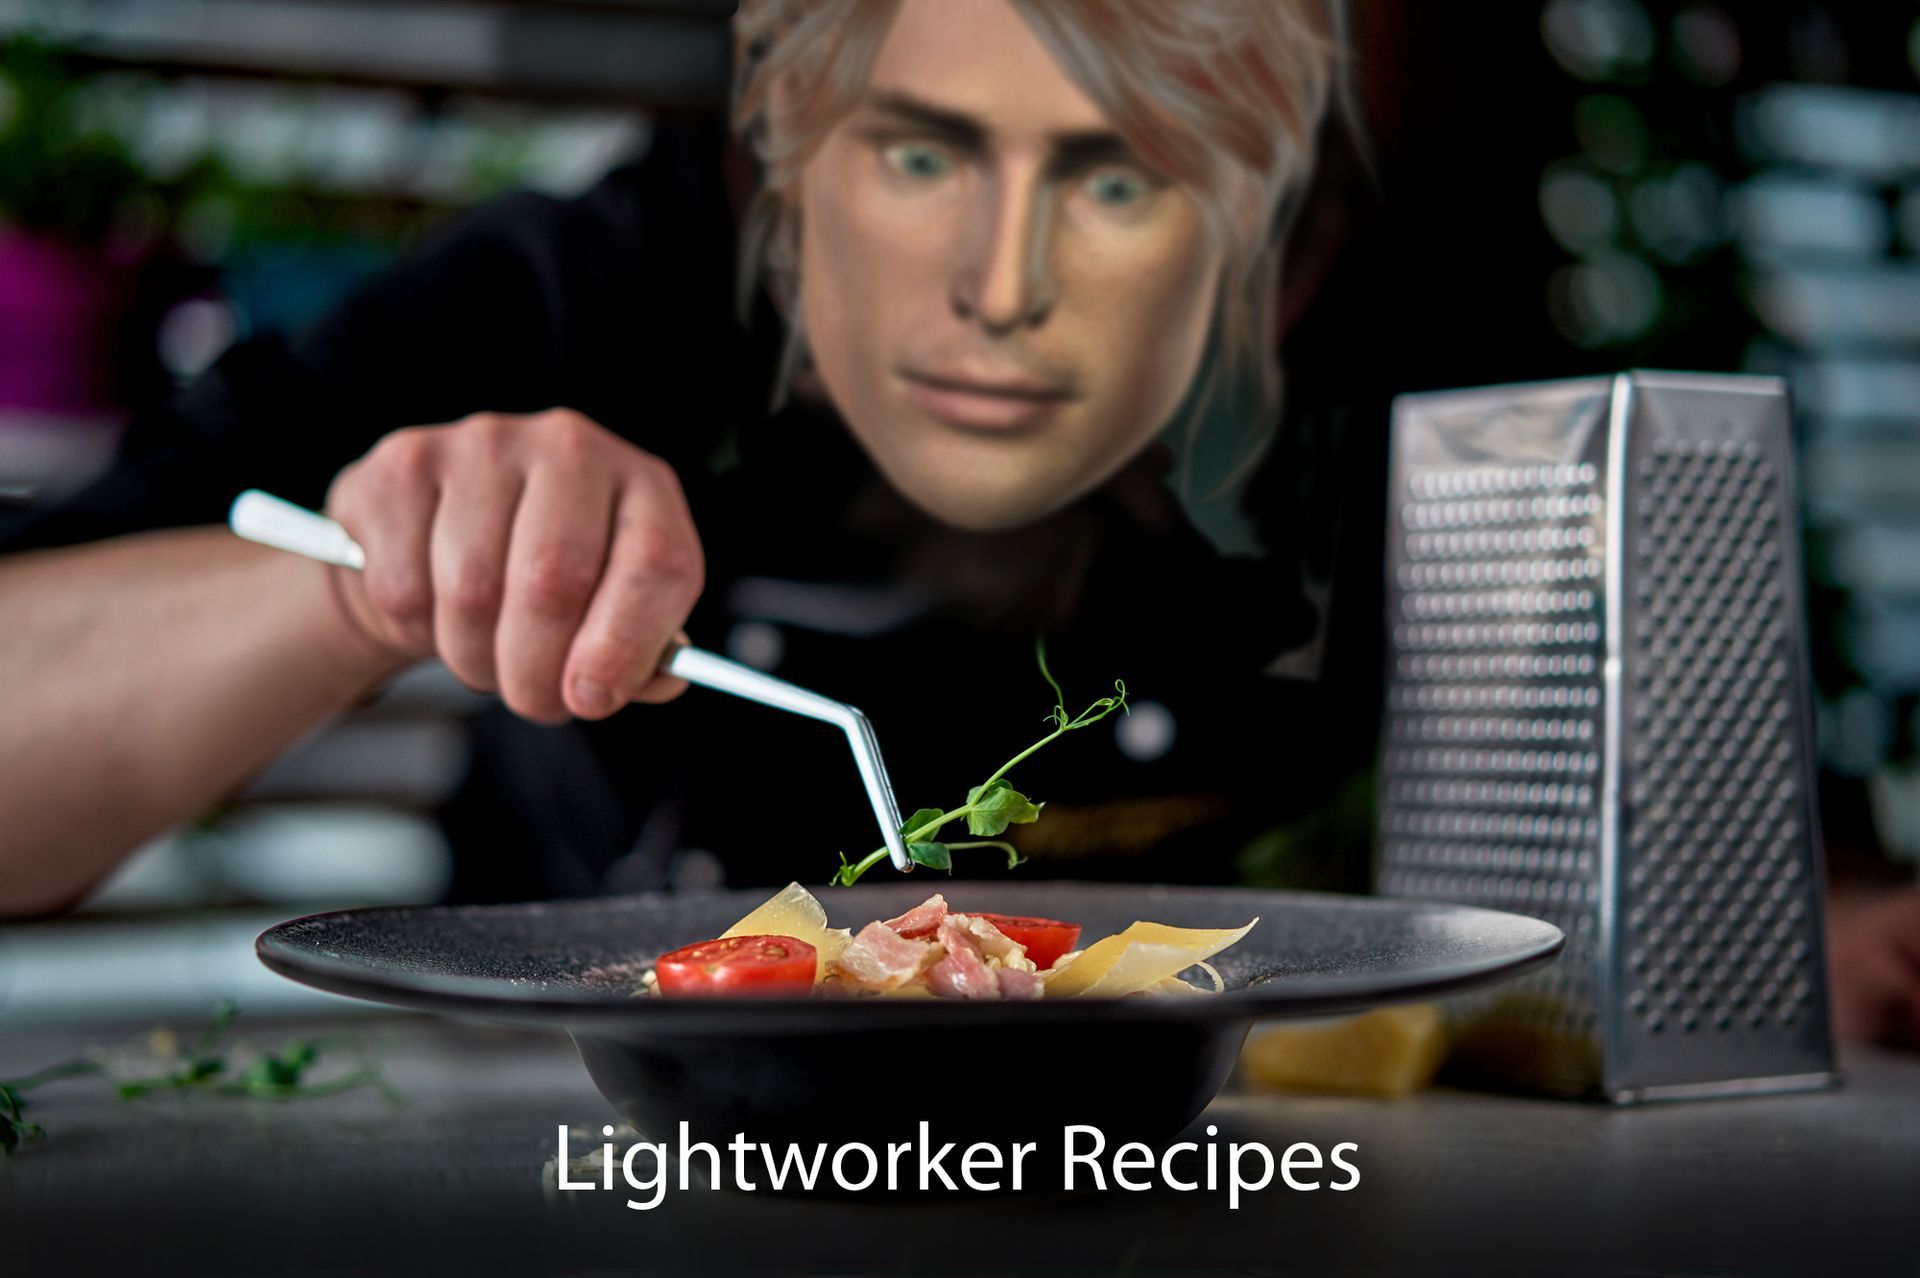 Lightworker recipes by Jordan Canon